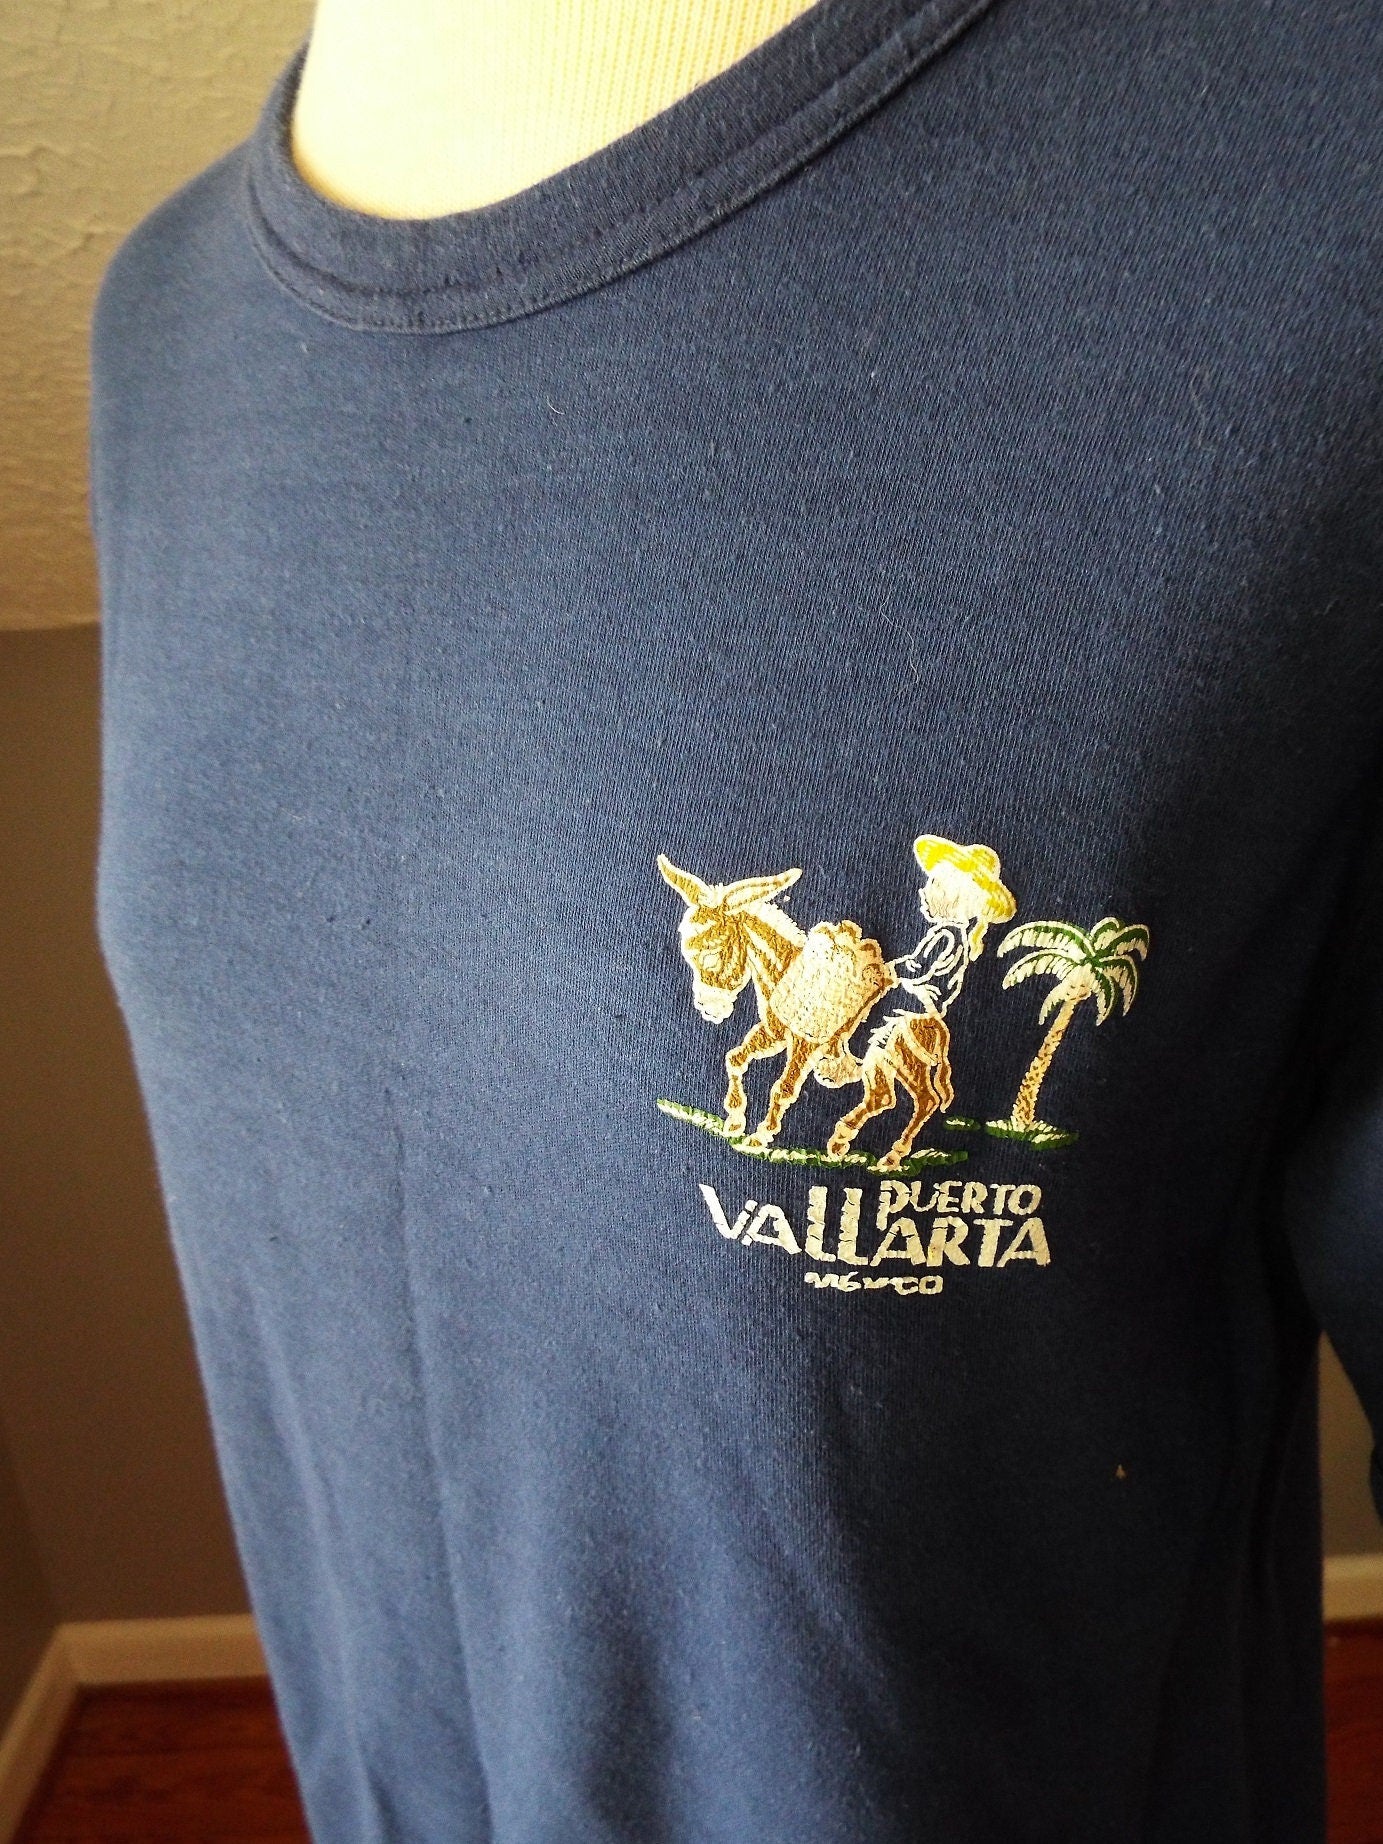 Vintage Puerto Vallarta T-Shirt by San Jorge